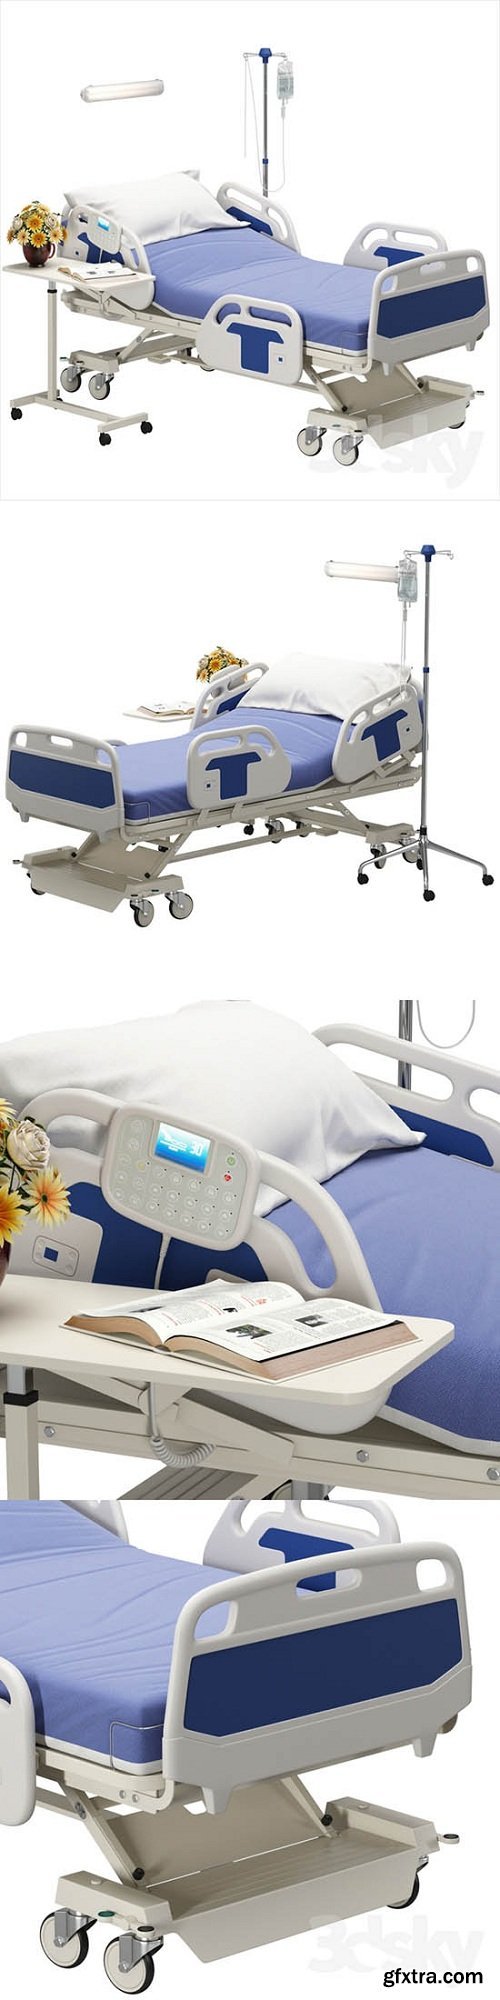 Hospital Bed 3d Model